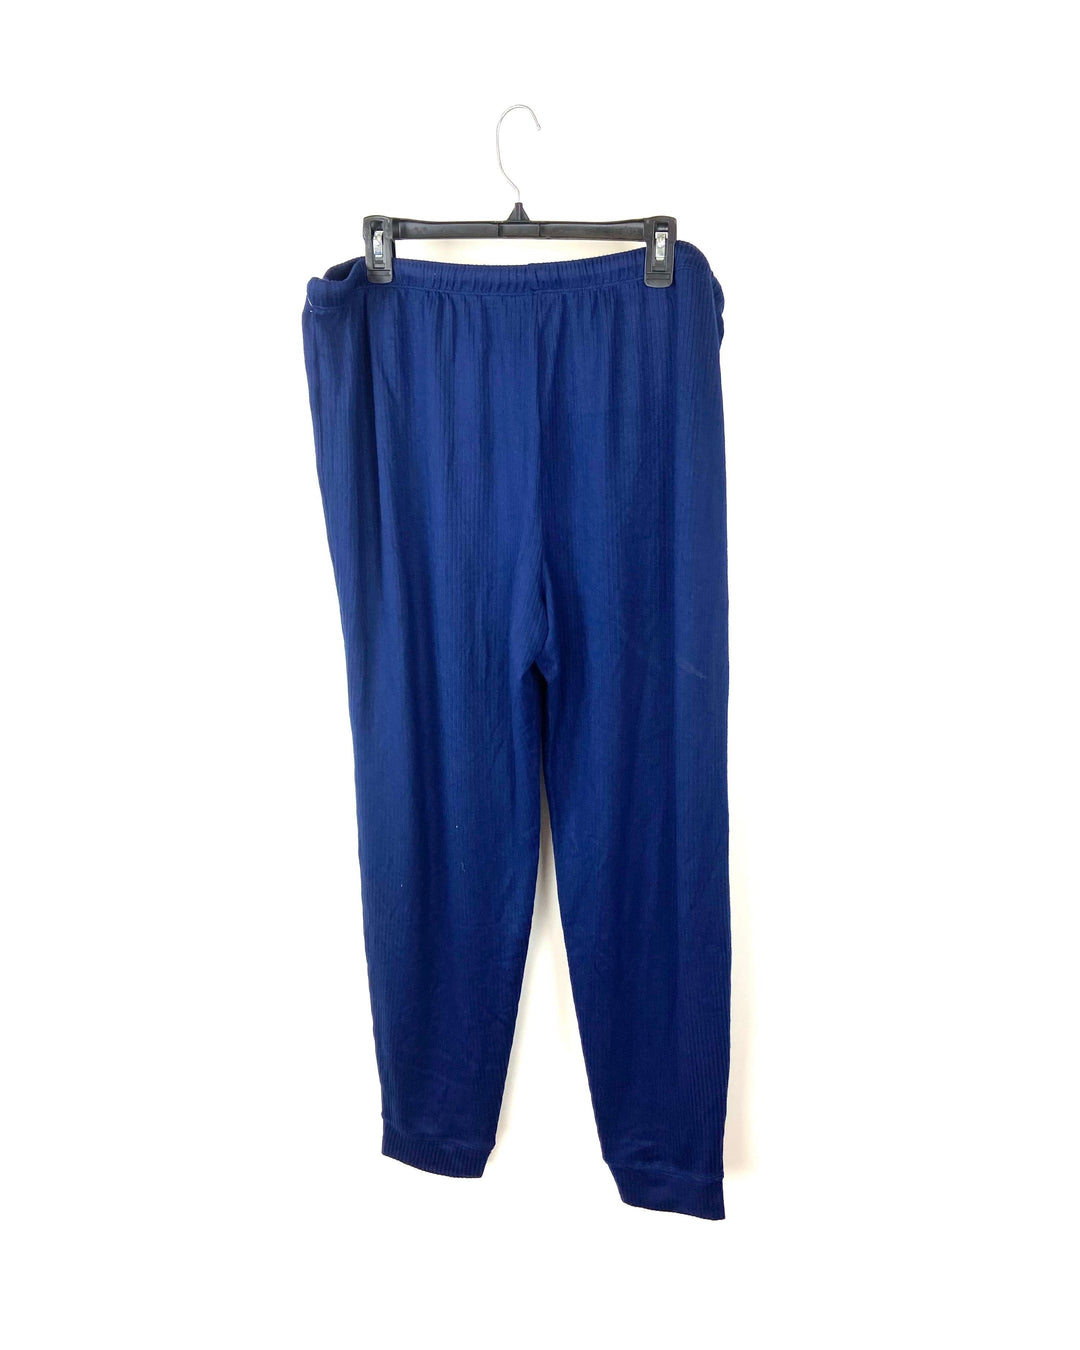 Navy Blue Lounge Pants - 1X